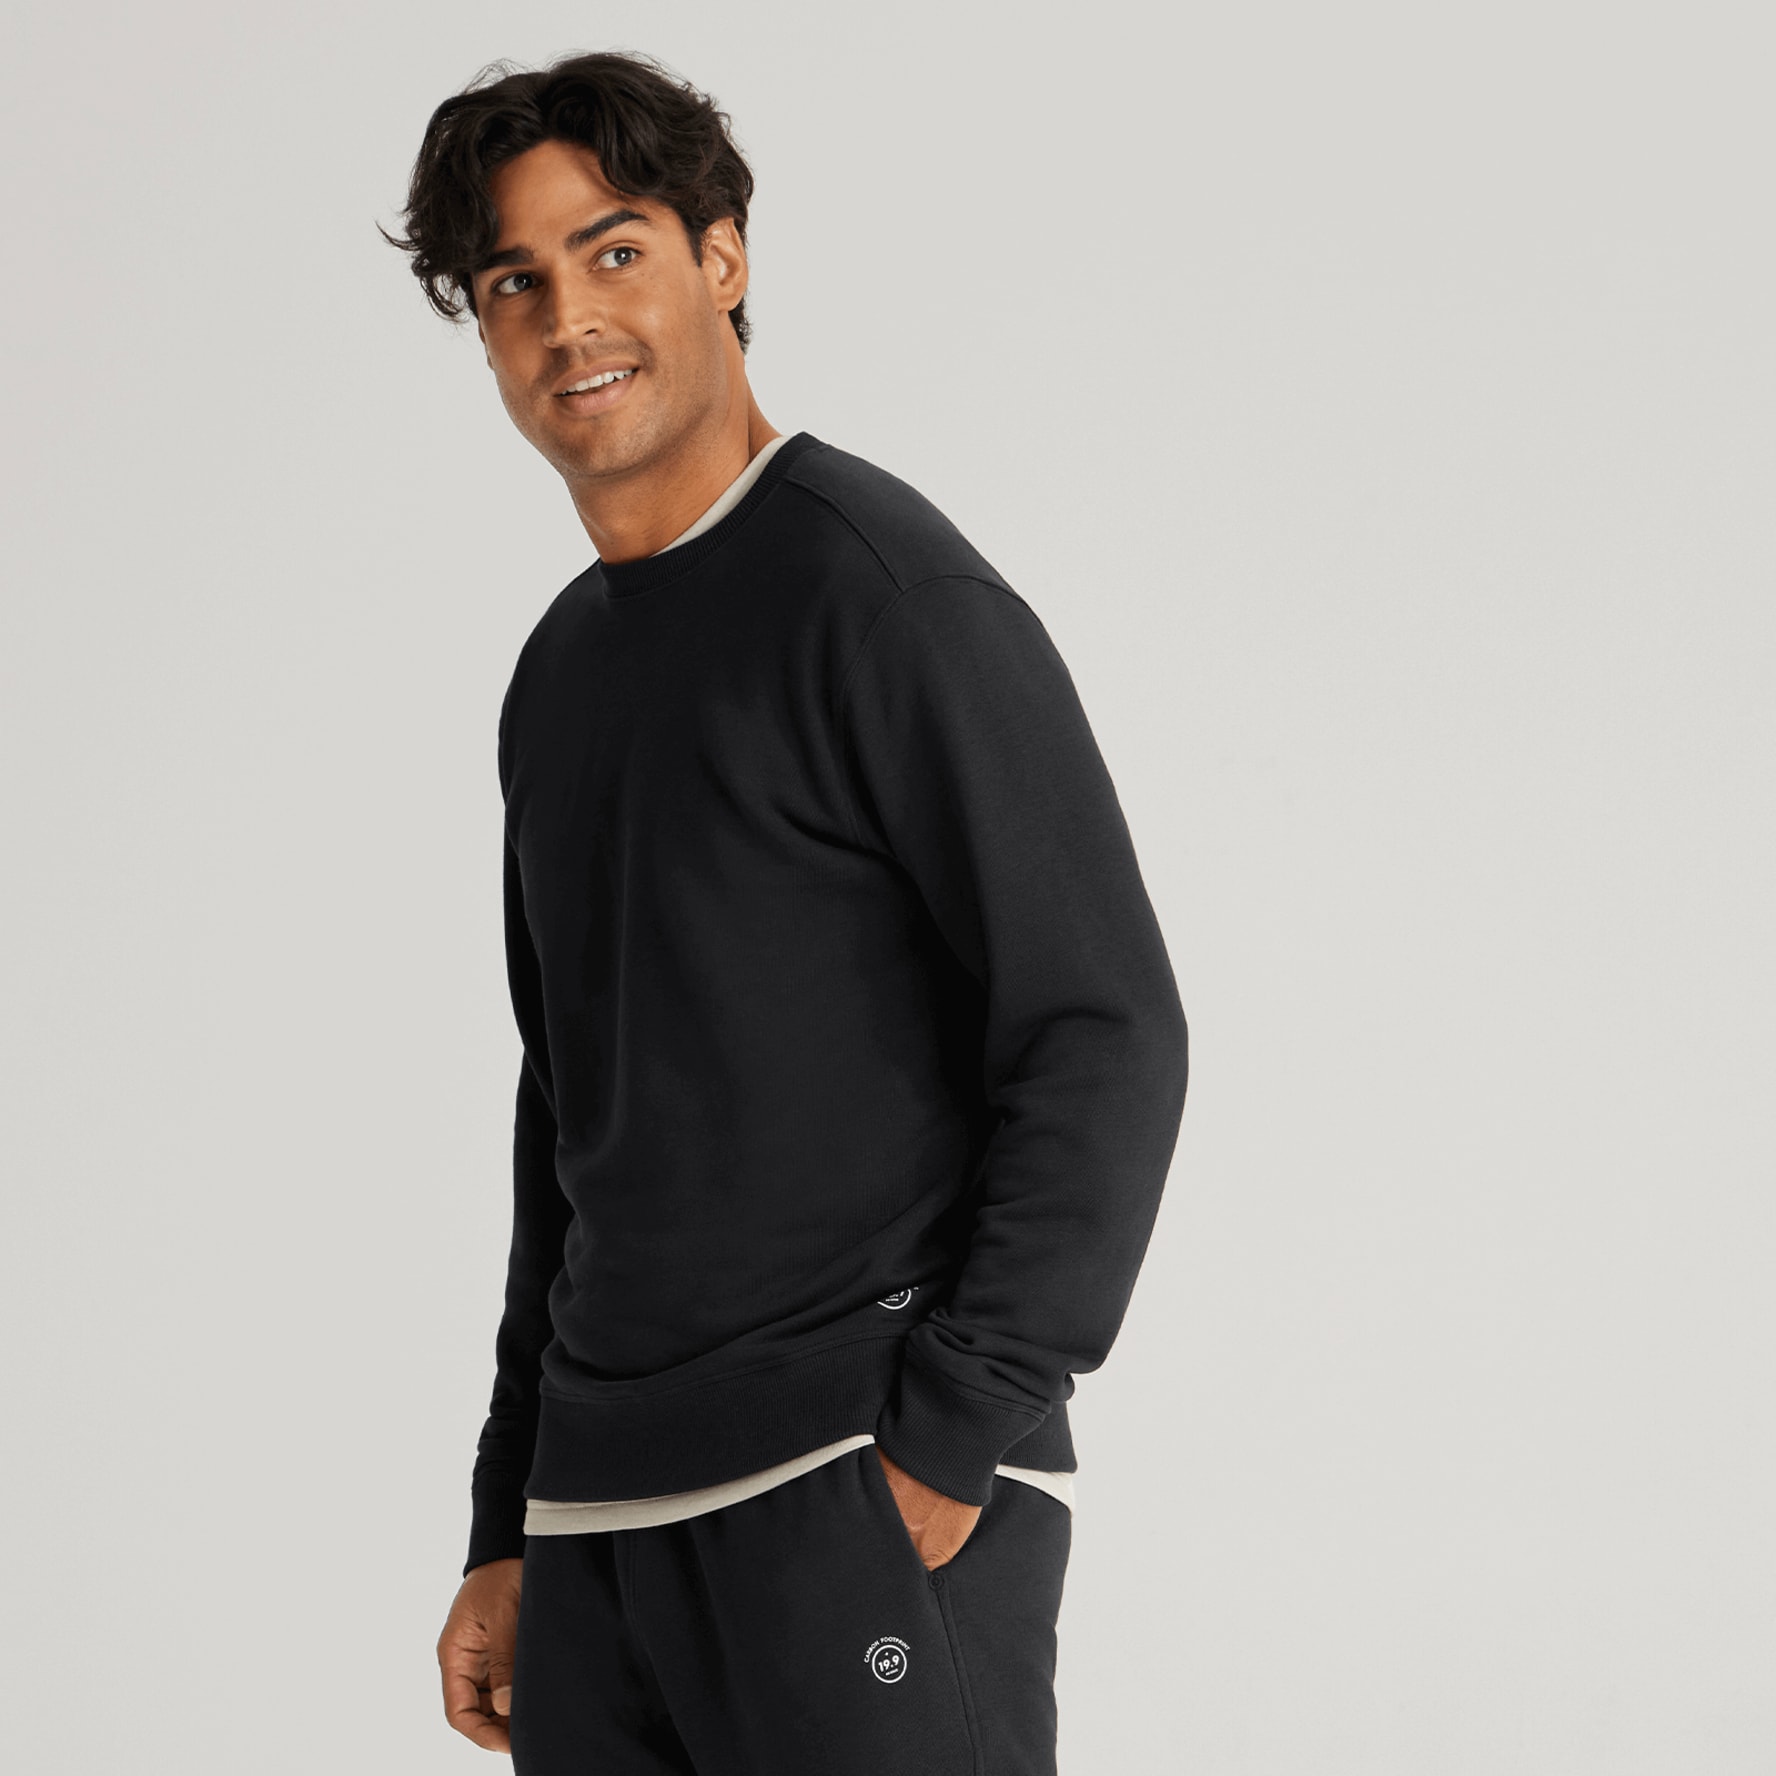 Brand - Symbol Men's Cotton Blend Crew Neck Sweatshirt